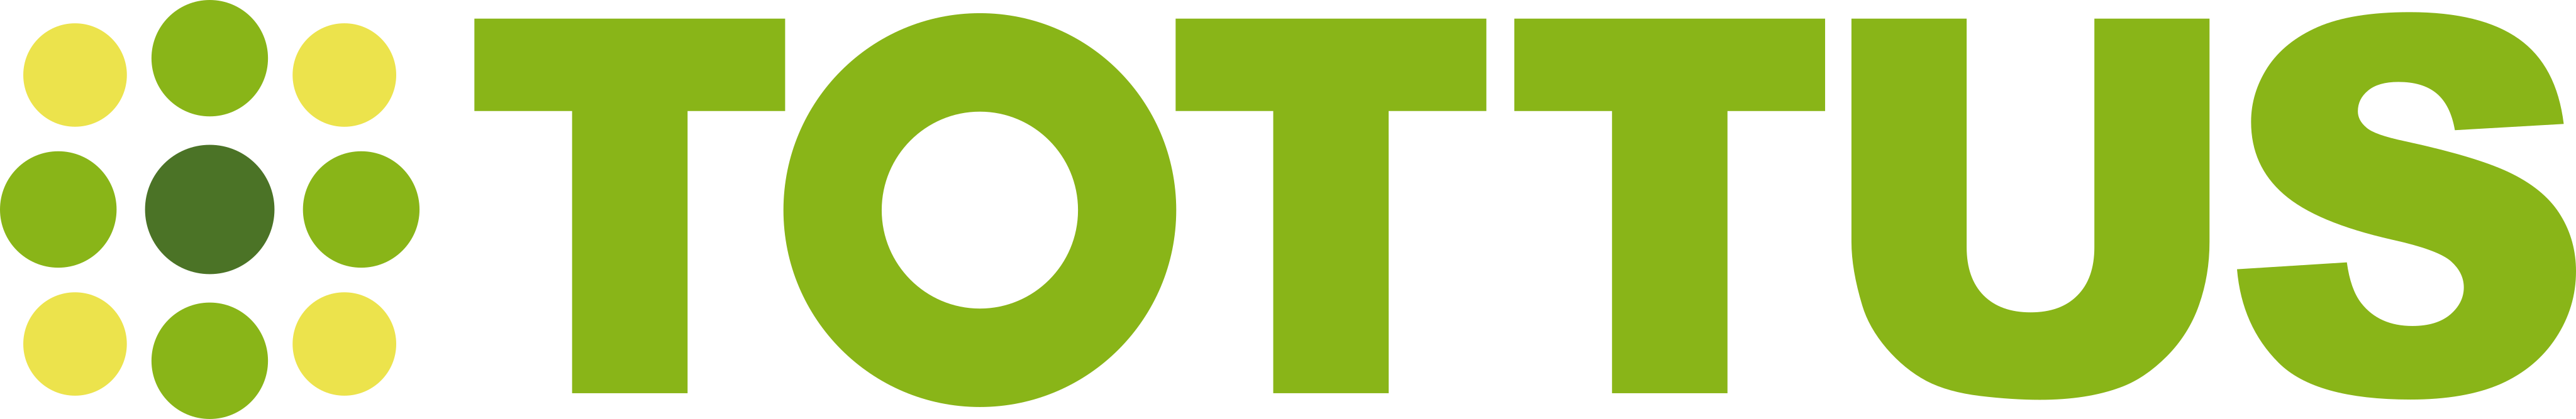 Tottus Brand Logo